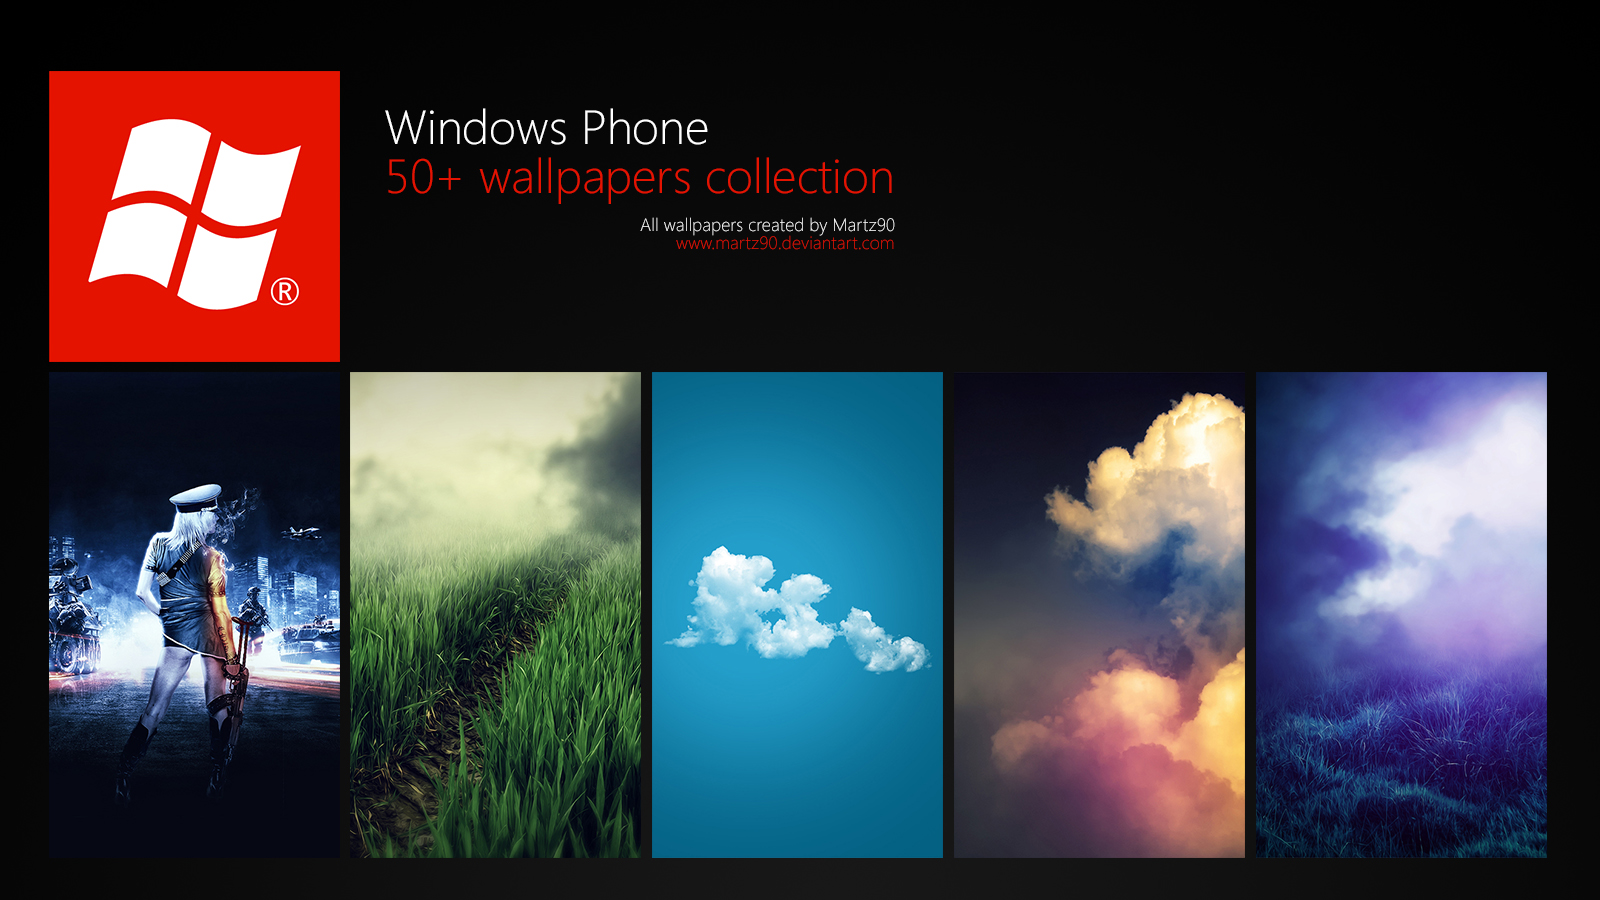 HD Wallpaper Windows Phone Collection By Martz Dfm